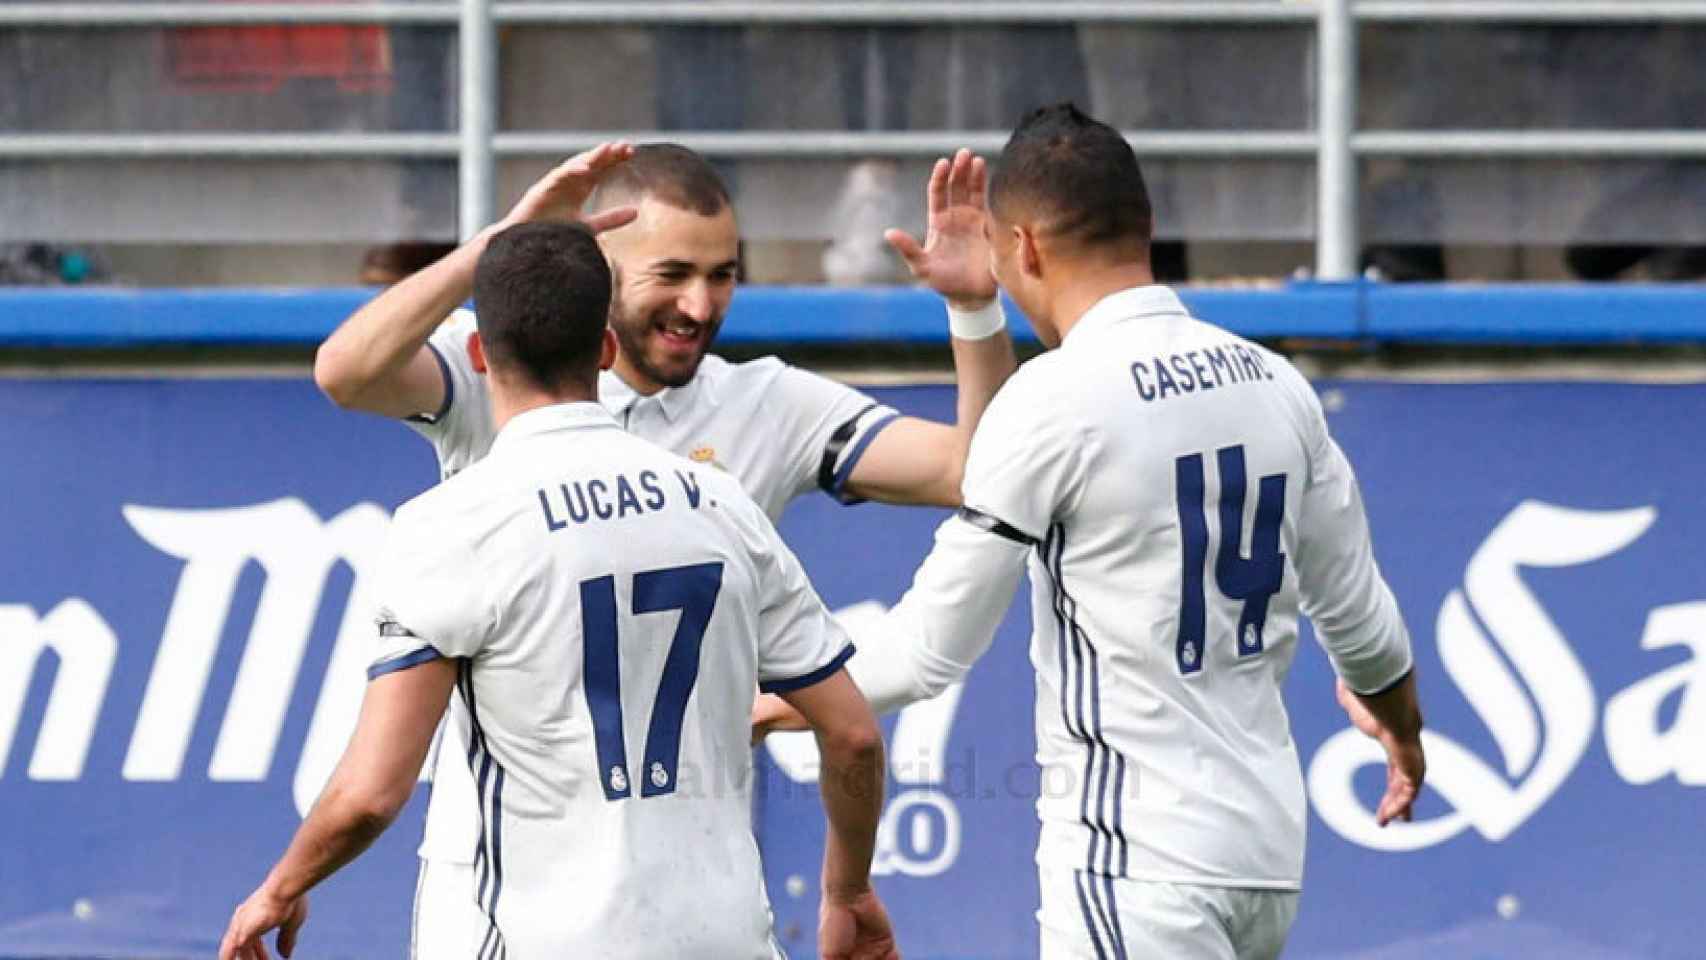 Lucas Vázquez y Casemiro felicitando a Benzema por su gol